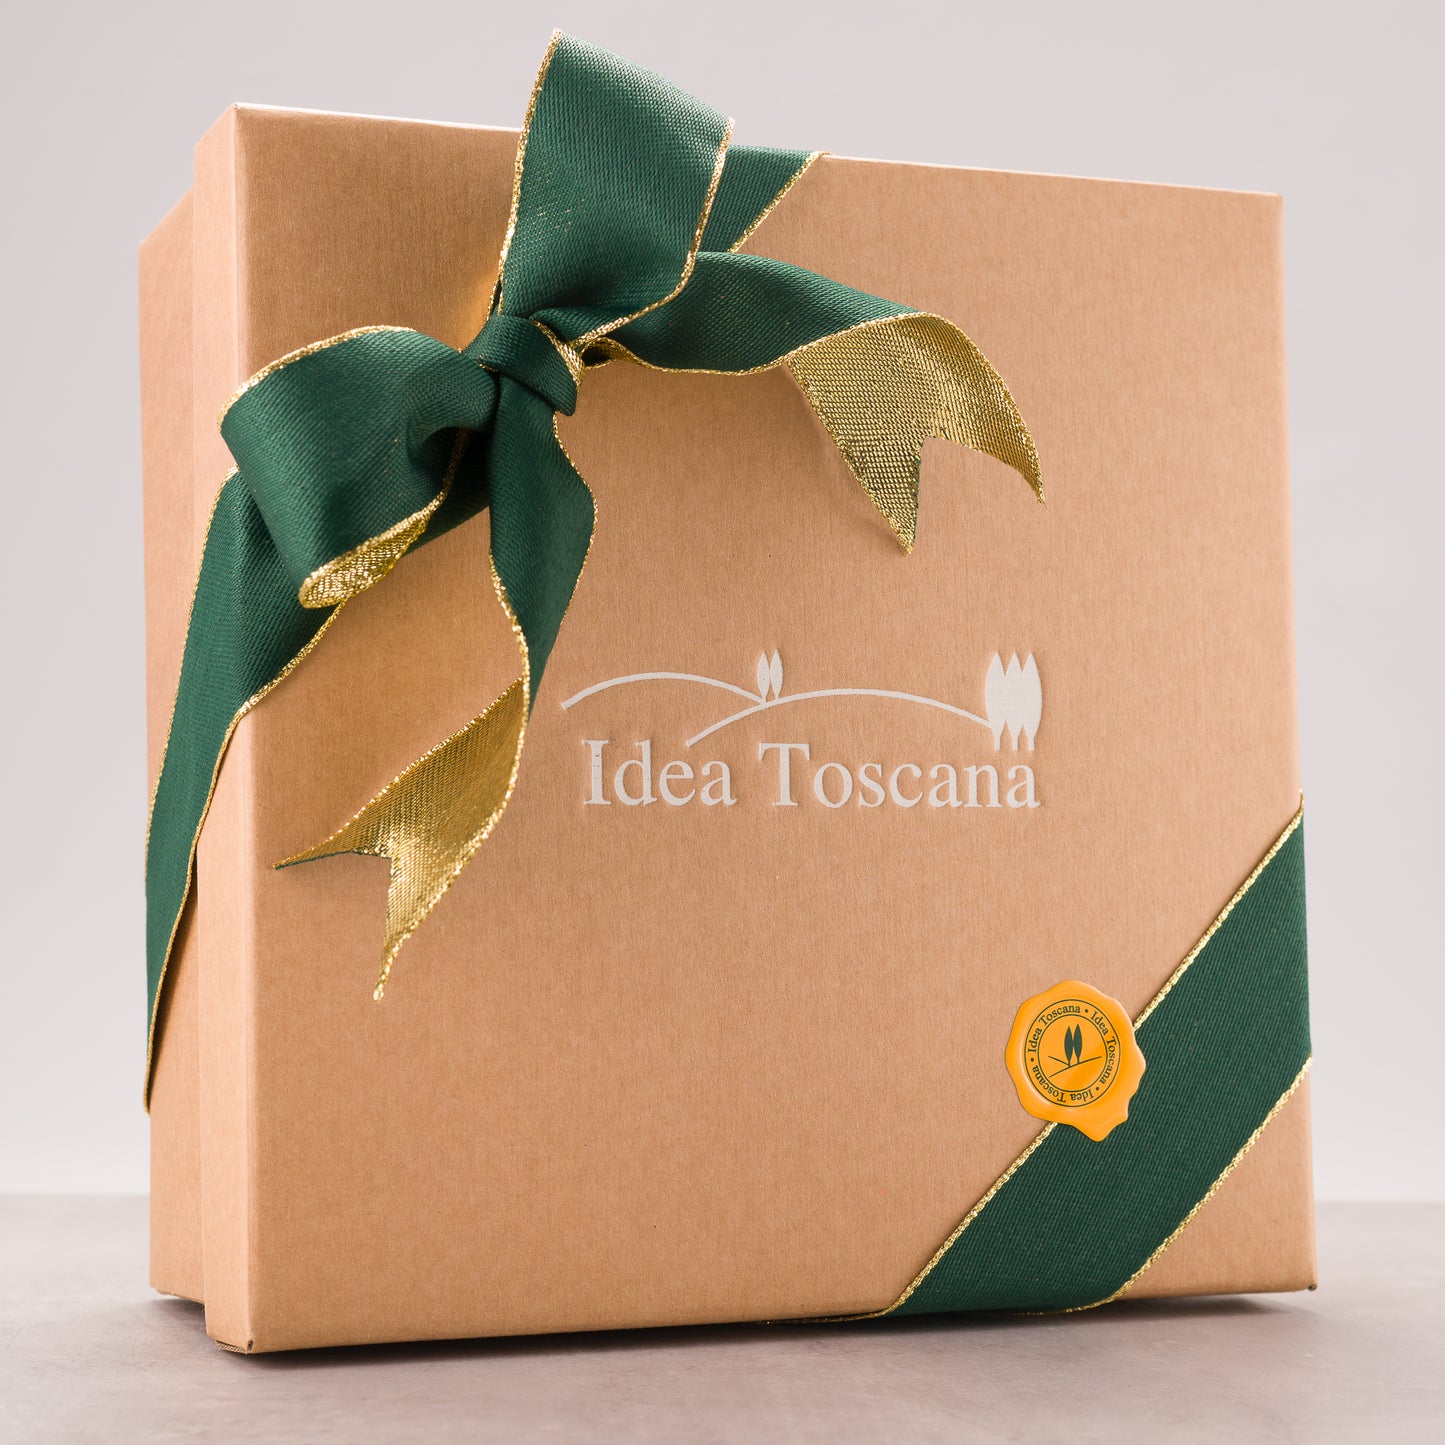 Terre di Toscana Gift Box - Idea Toscana